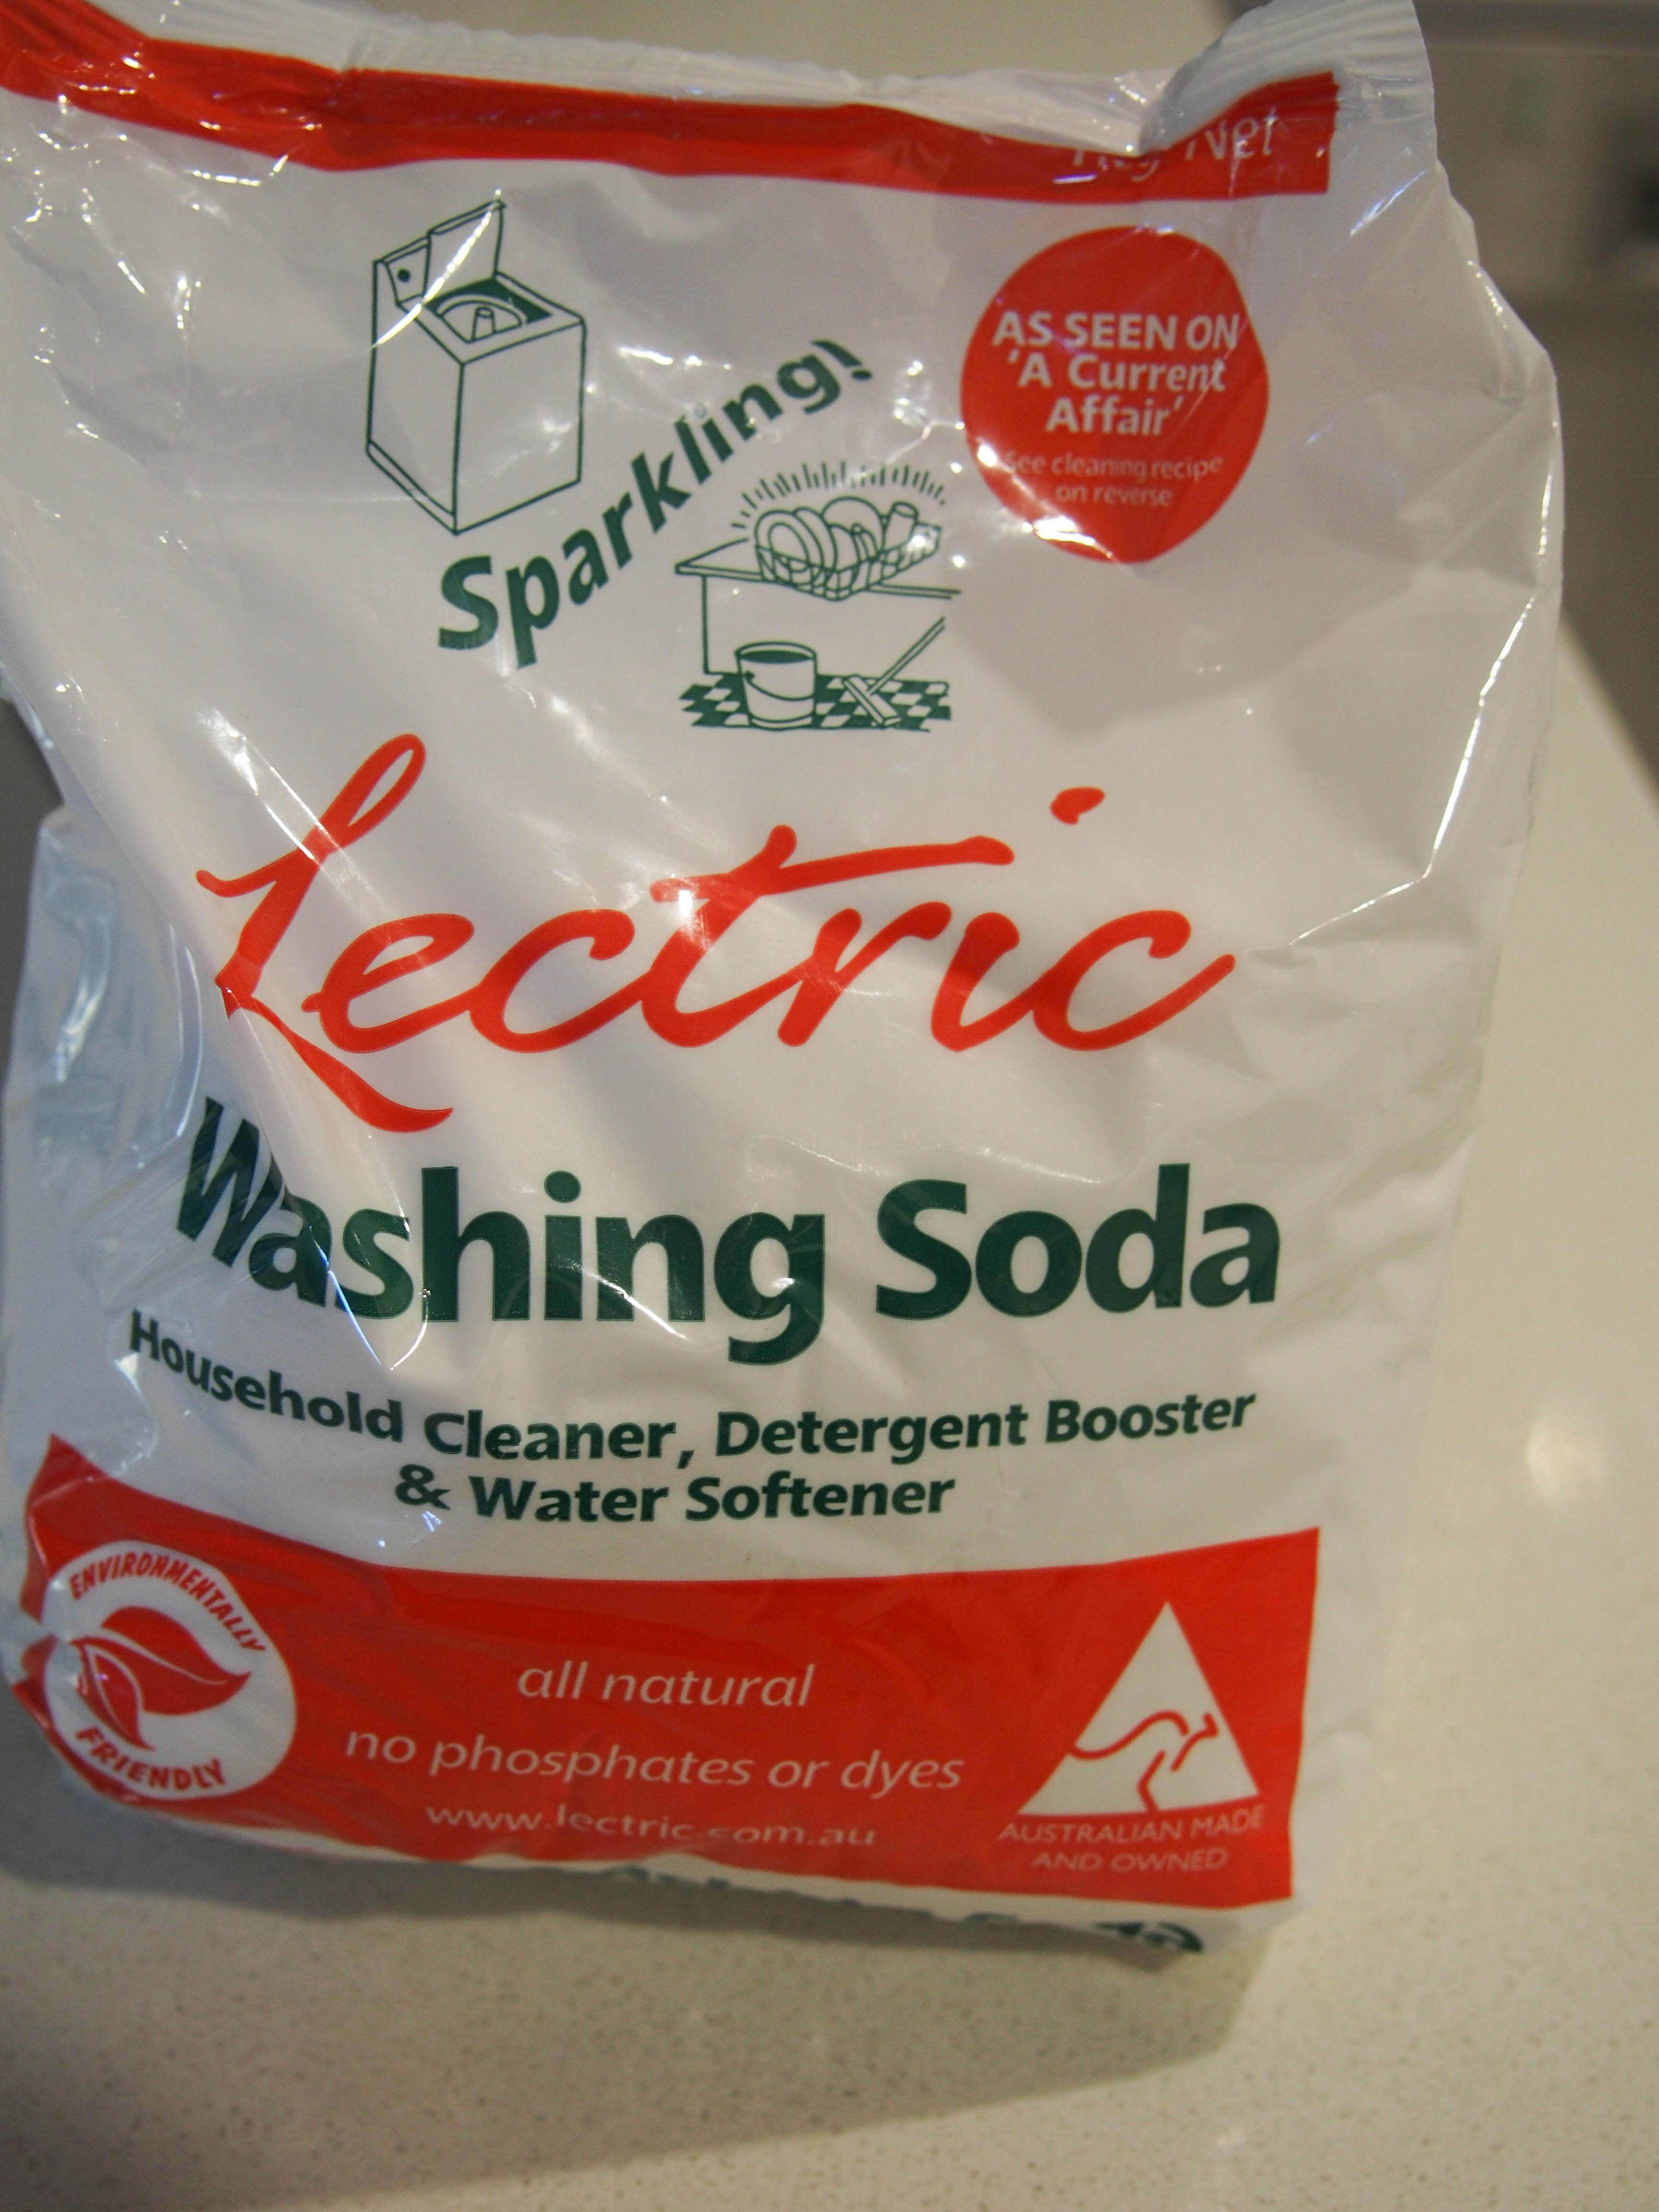 A bag of lectric washing soda